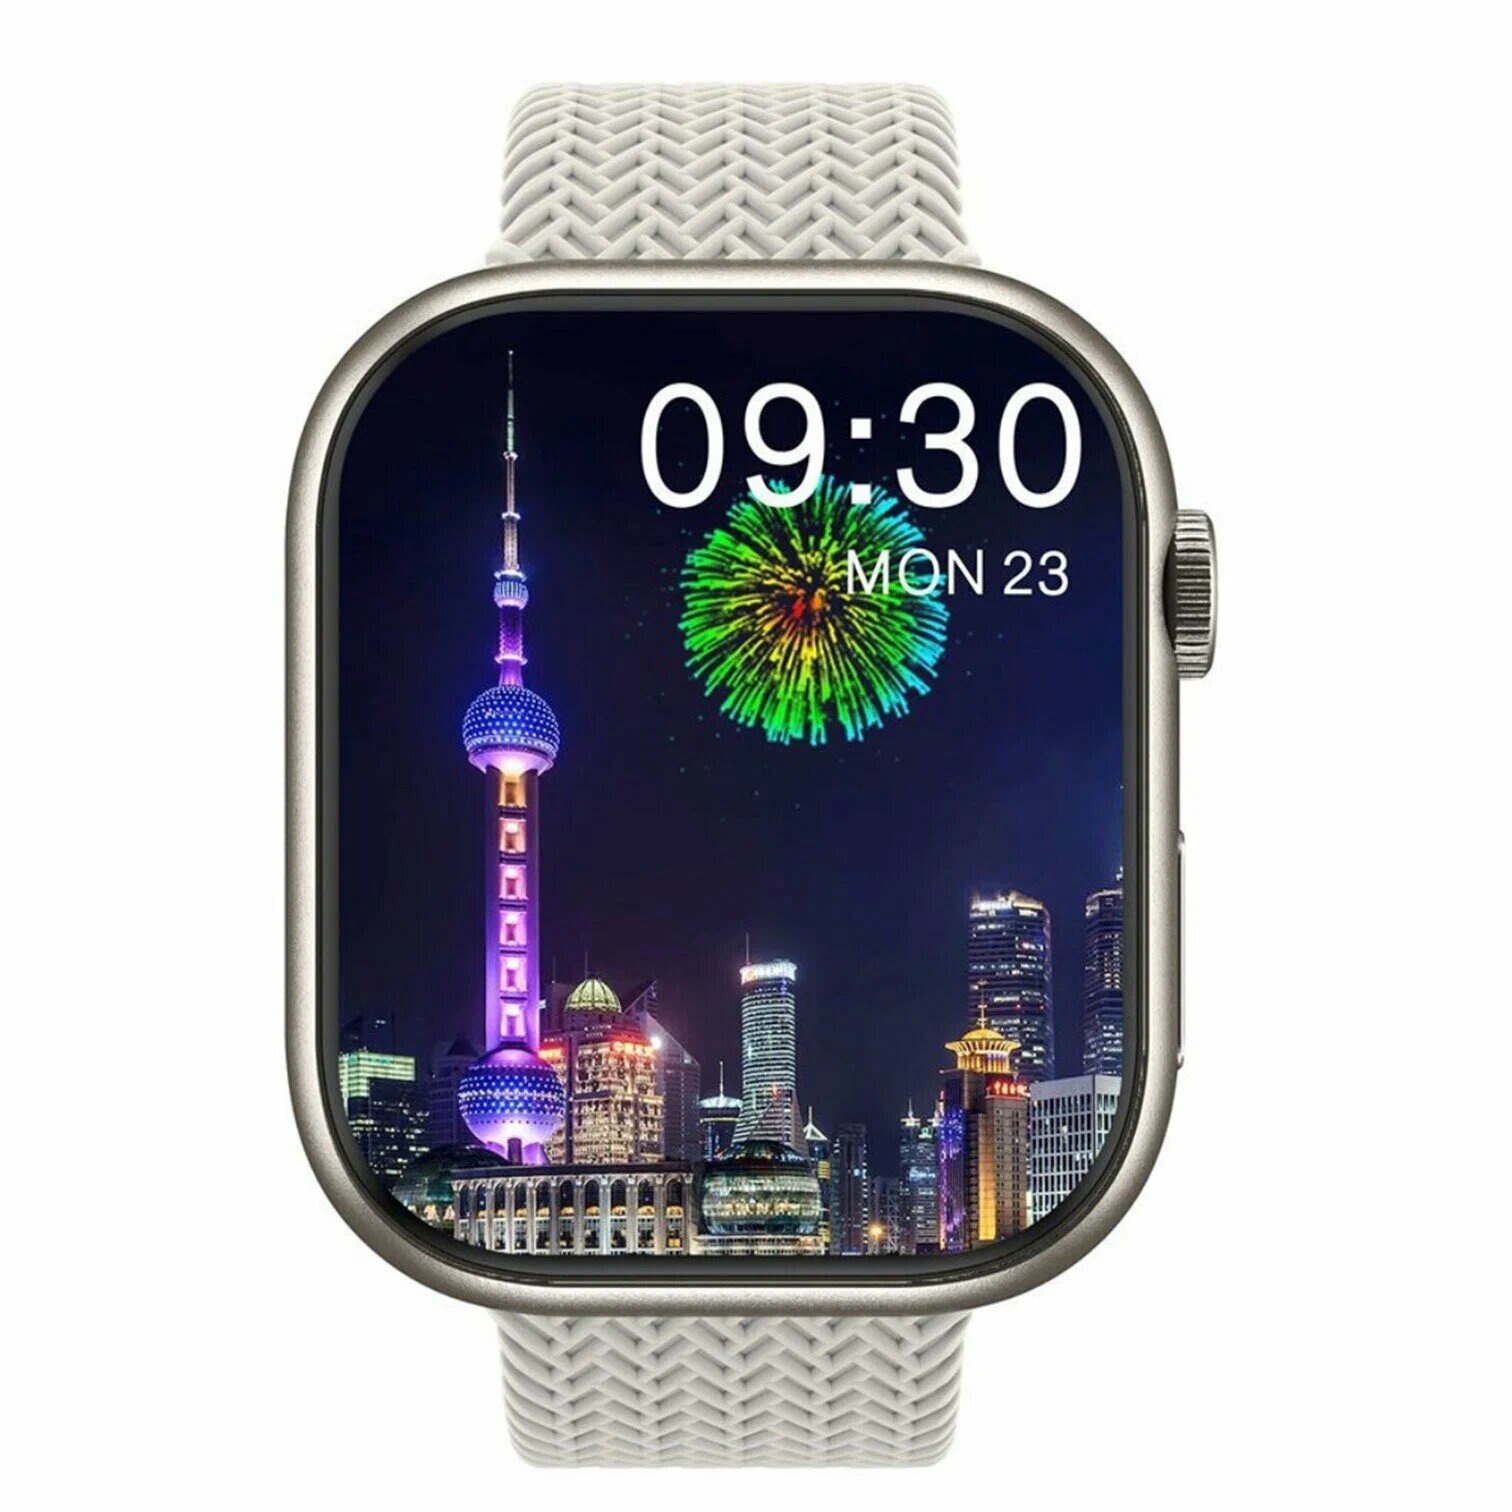 Cмарт часы HK9 PRO PREMIUM Series Smart Watch Amoled Display, iOS, Android, Bluetooth звонки, Уведомления, Серебристые